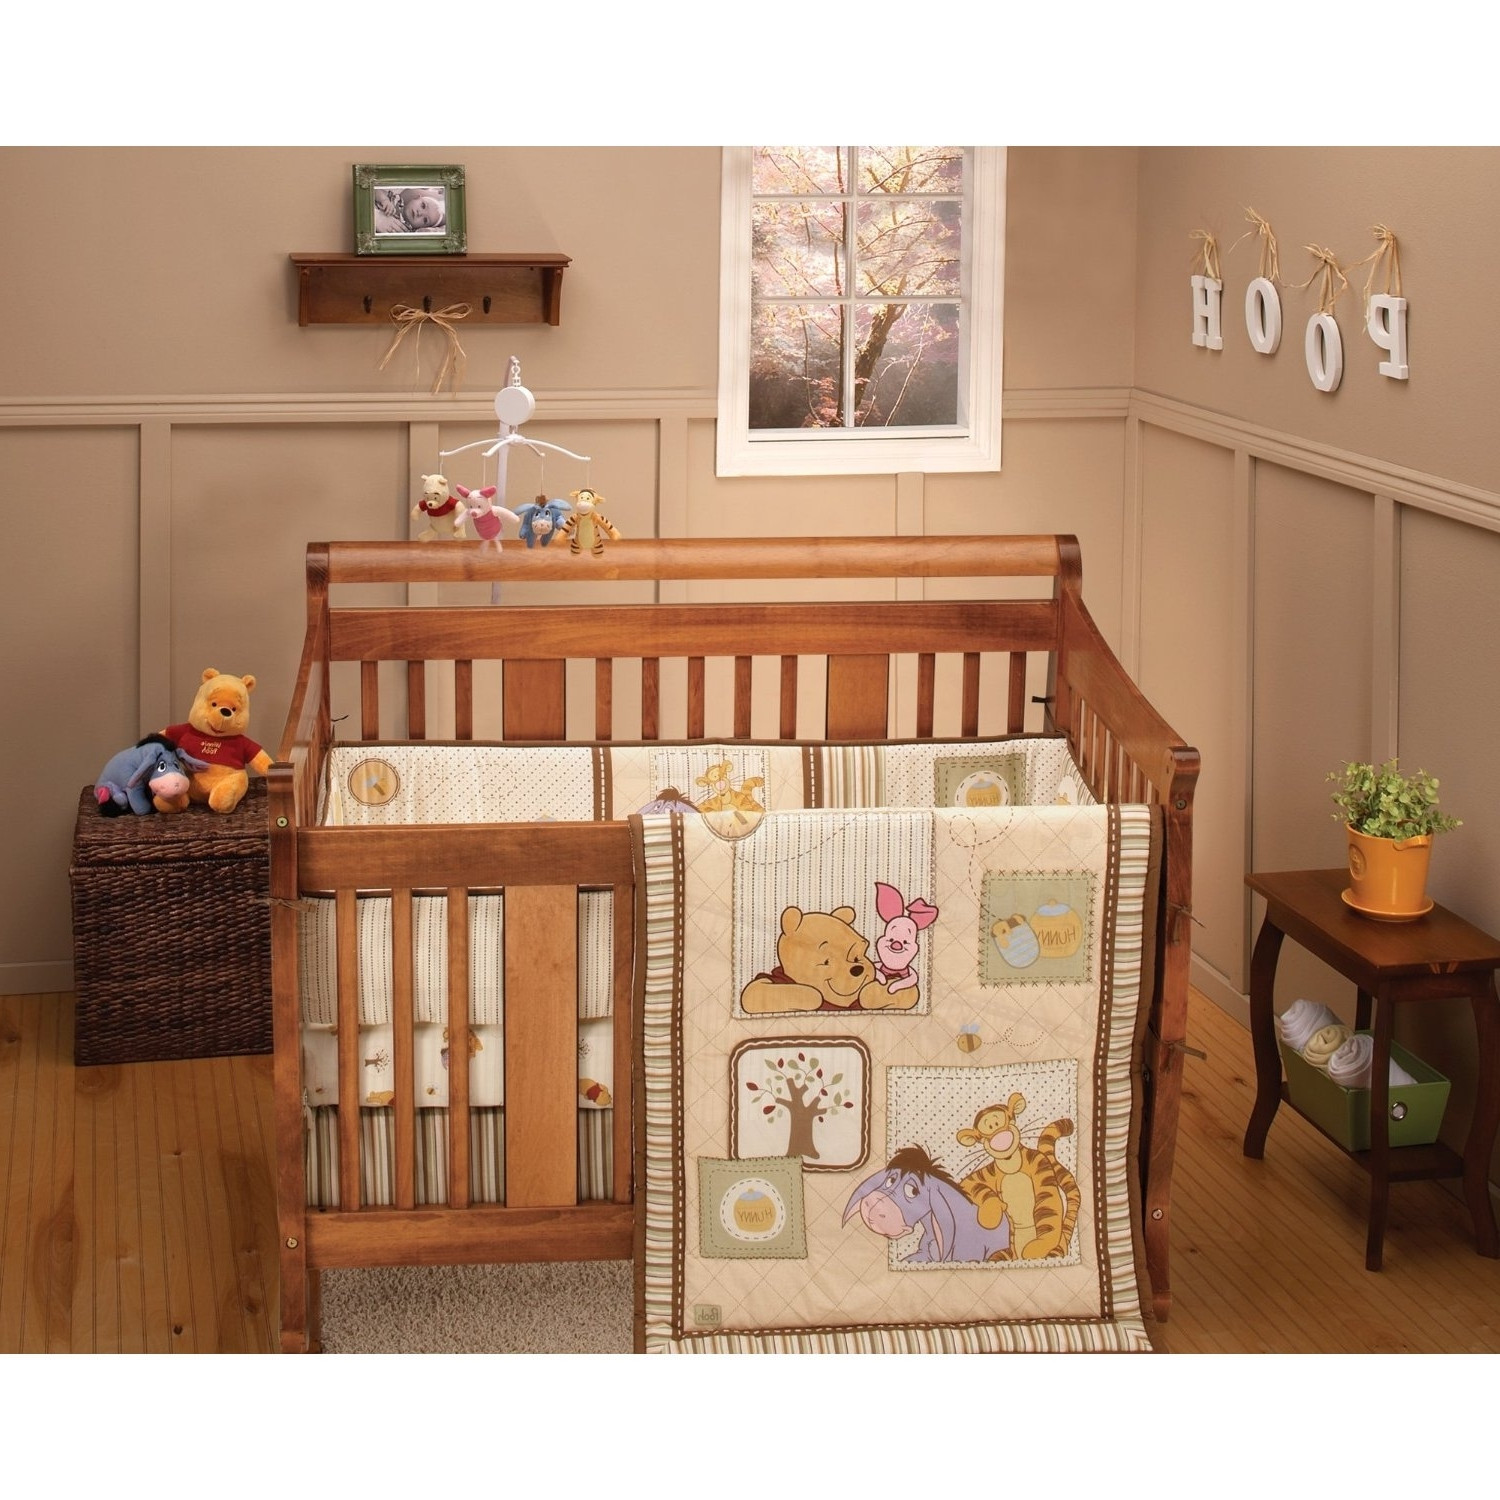 Walmart Baby Room Decor
 Winnie The Pooh Boys Crib Bedding Walmart Image